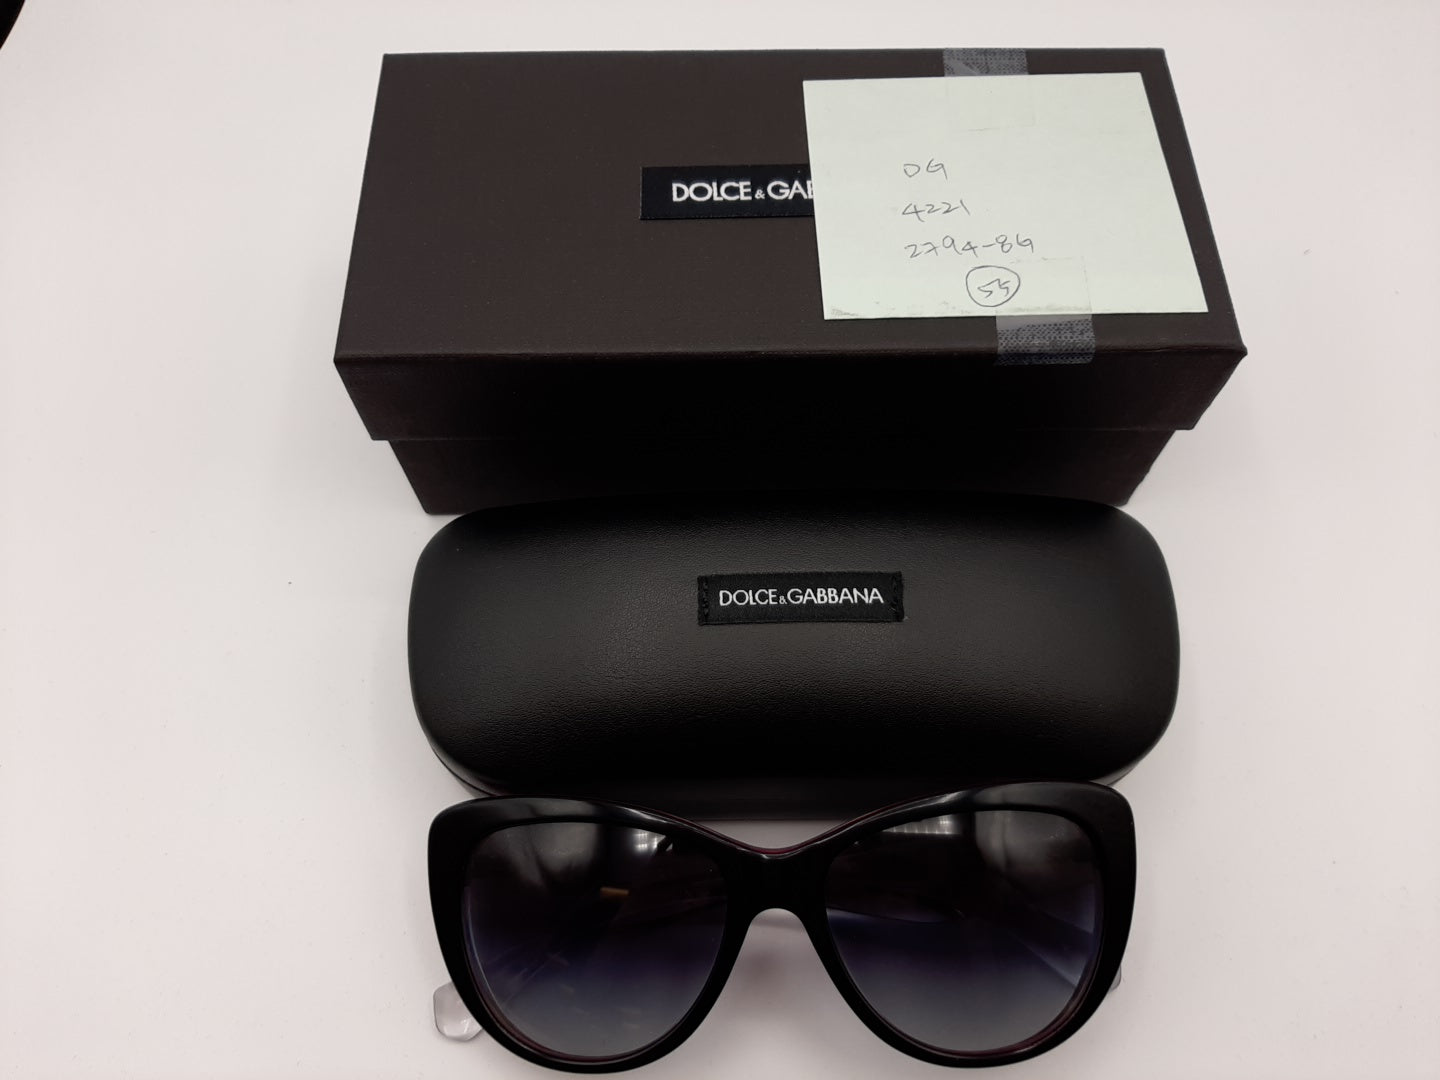 Dolce & Gabbana DG4221 2794/8G 55-17 140 3N Black red/Gray Cat Eye Sunglasses